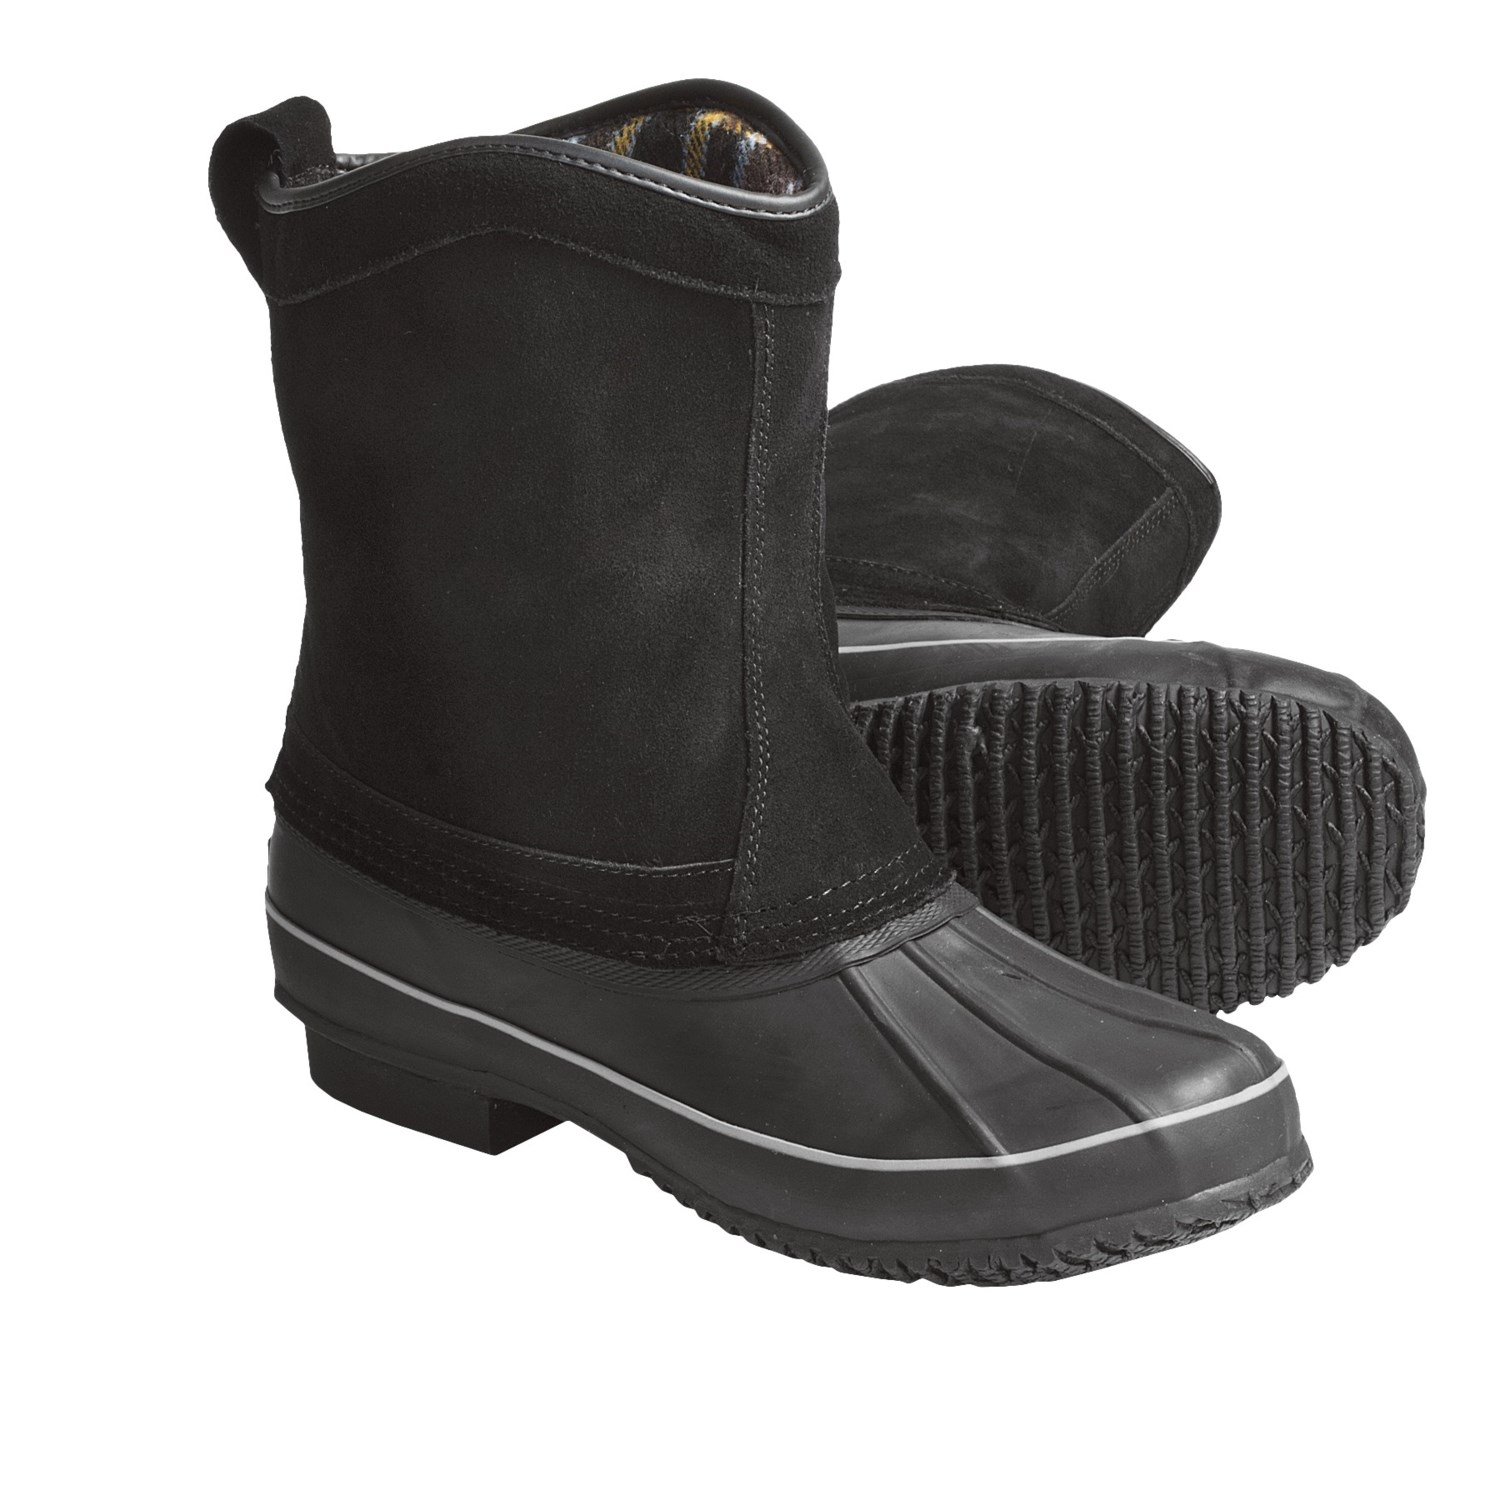 Khombu Duck Suede Winter Boots (For Men) 3723V - Save 35%